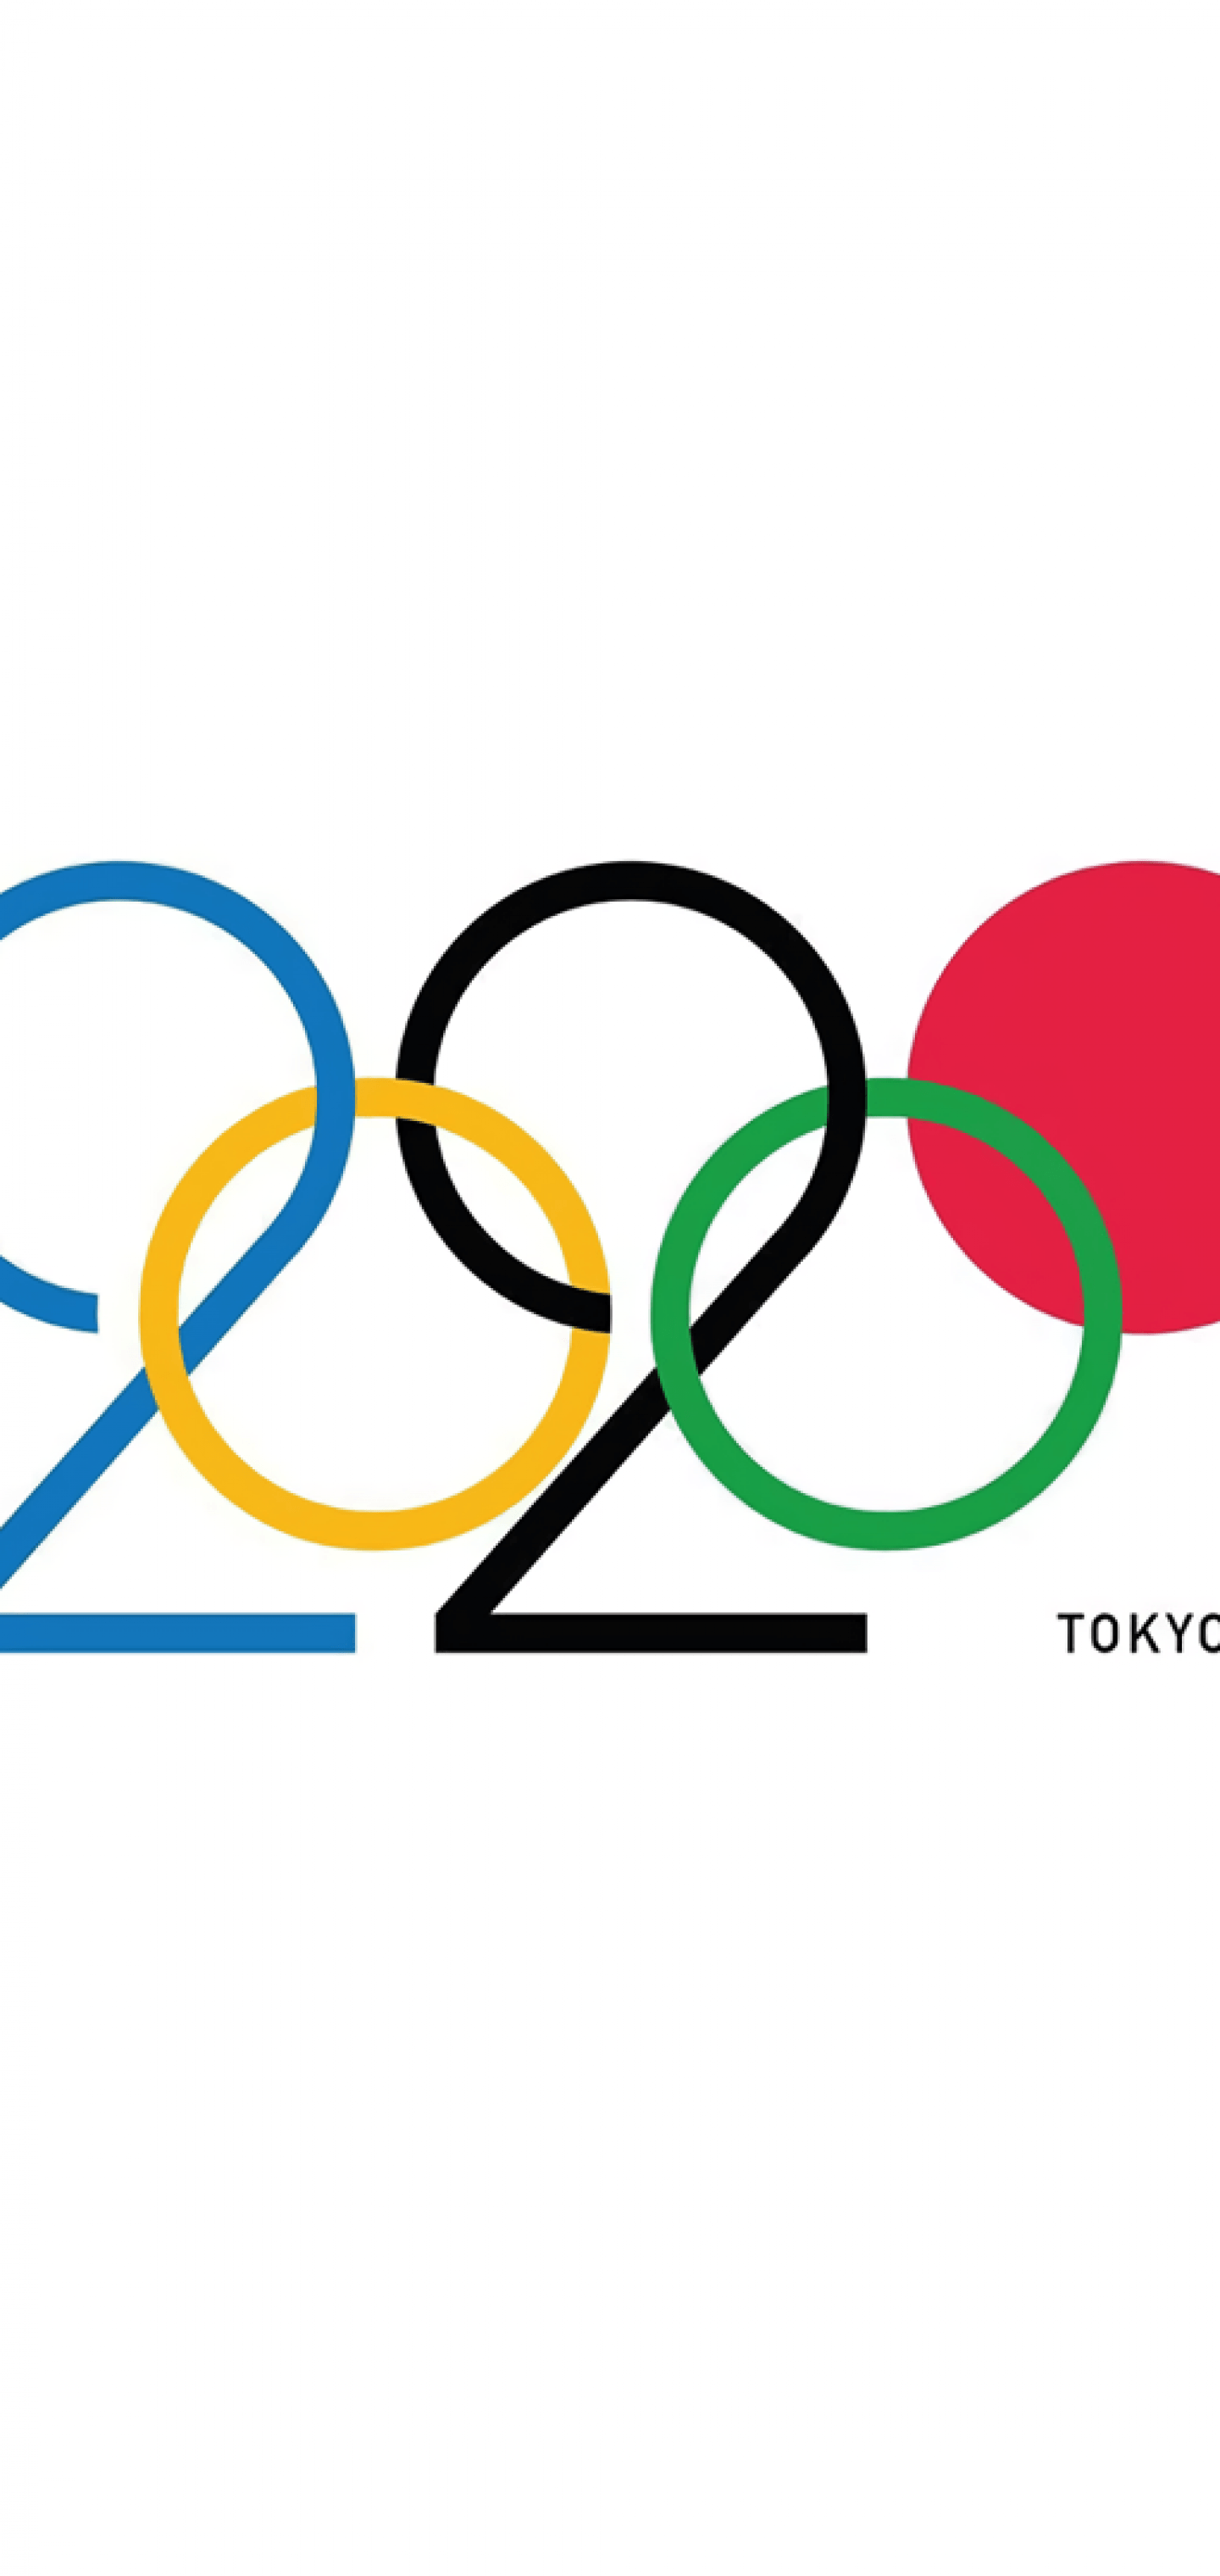 Download 1440x3040 2020 Olympics Tokyo, Japan Wallpaper